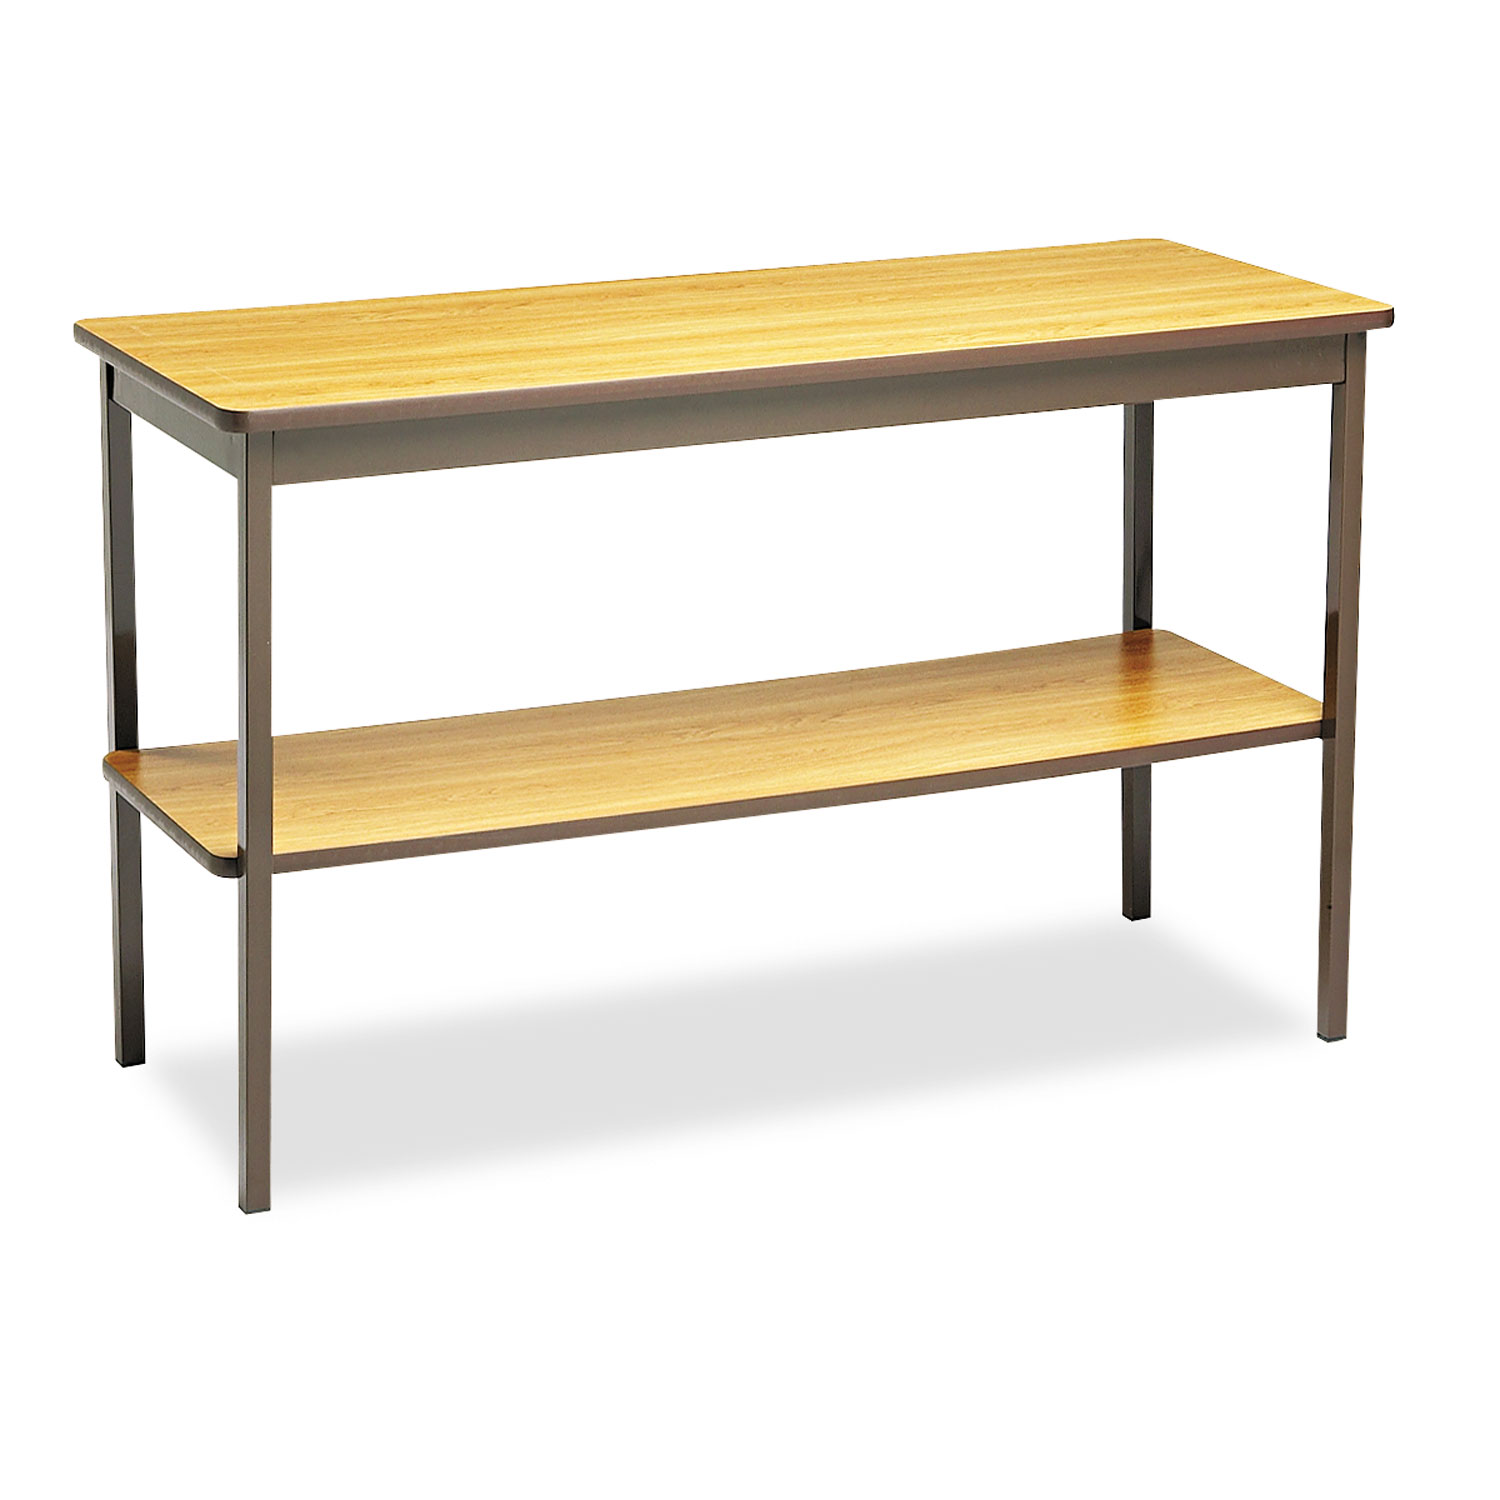  Barricks UTS1848-LQ Utility Table with Bottom Shelf, Rectangular, 48w x 18d x 30h, Oak/Brown (BRKUTS1848LQ) 